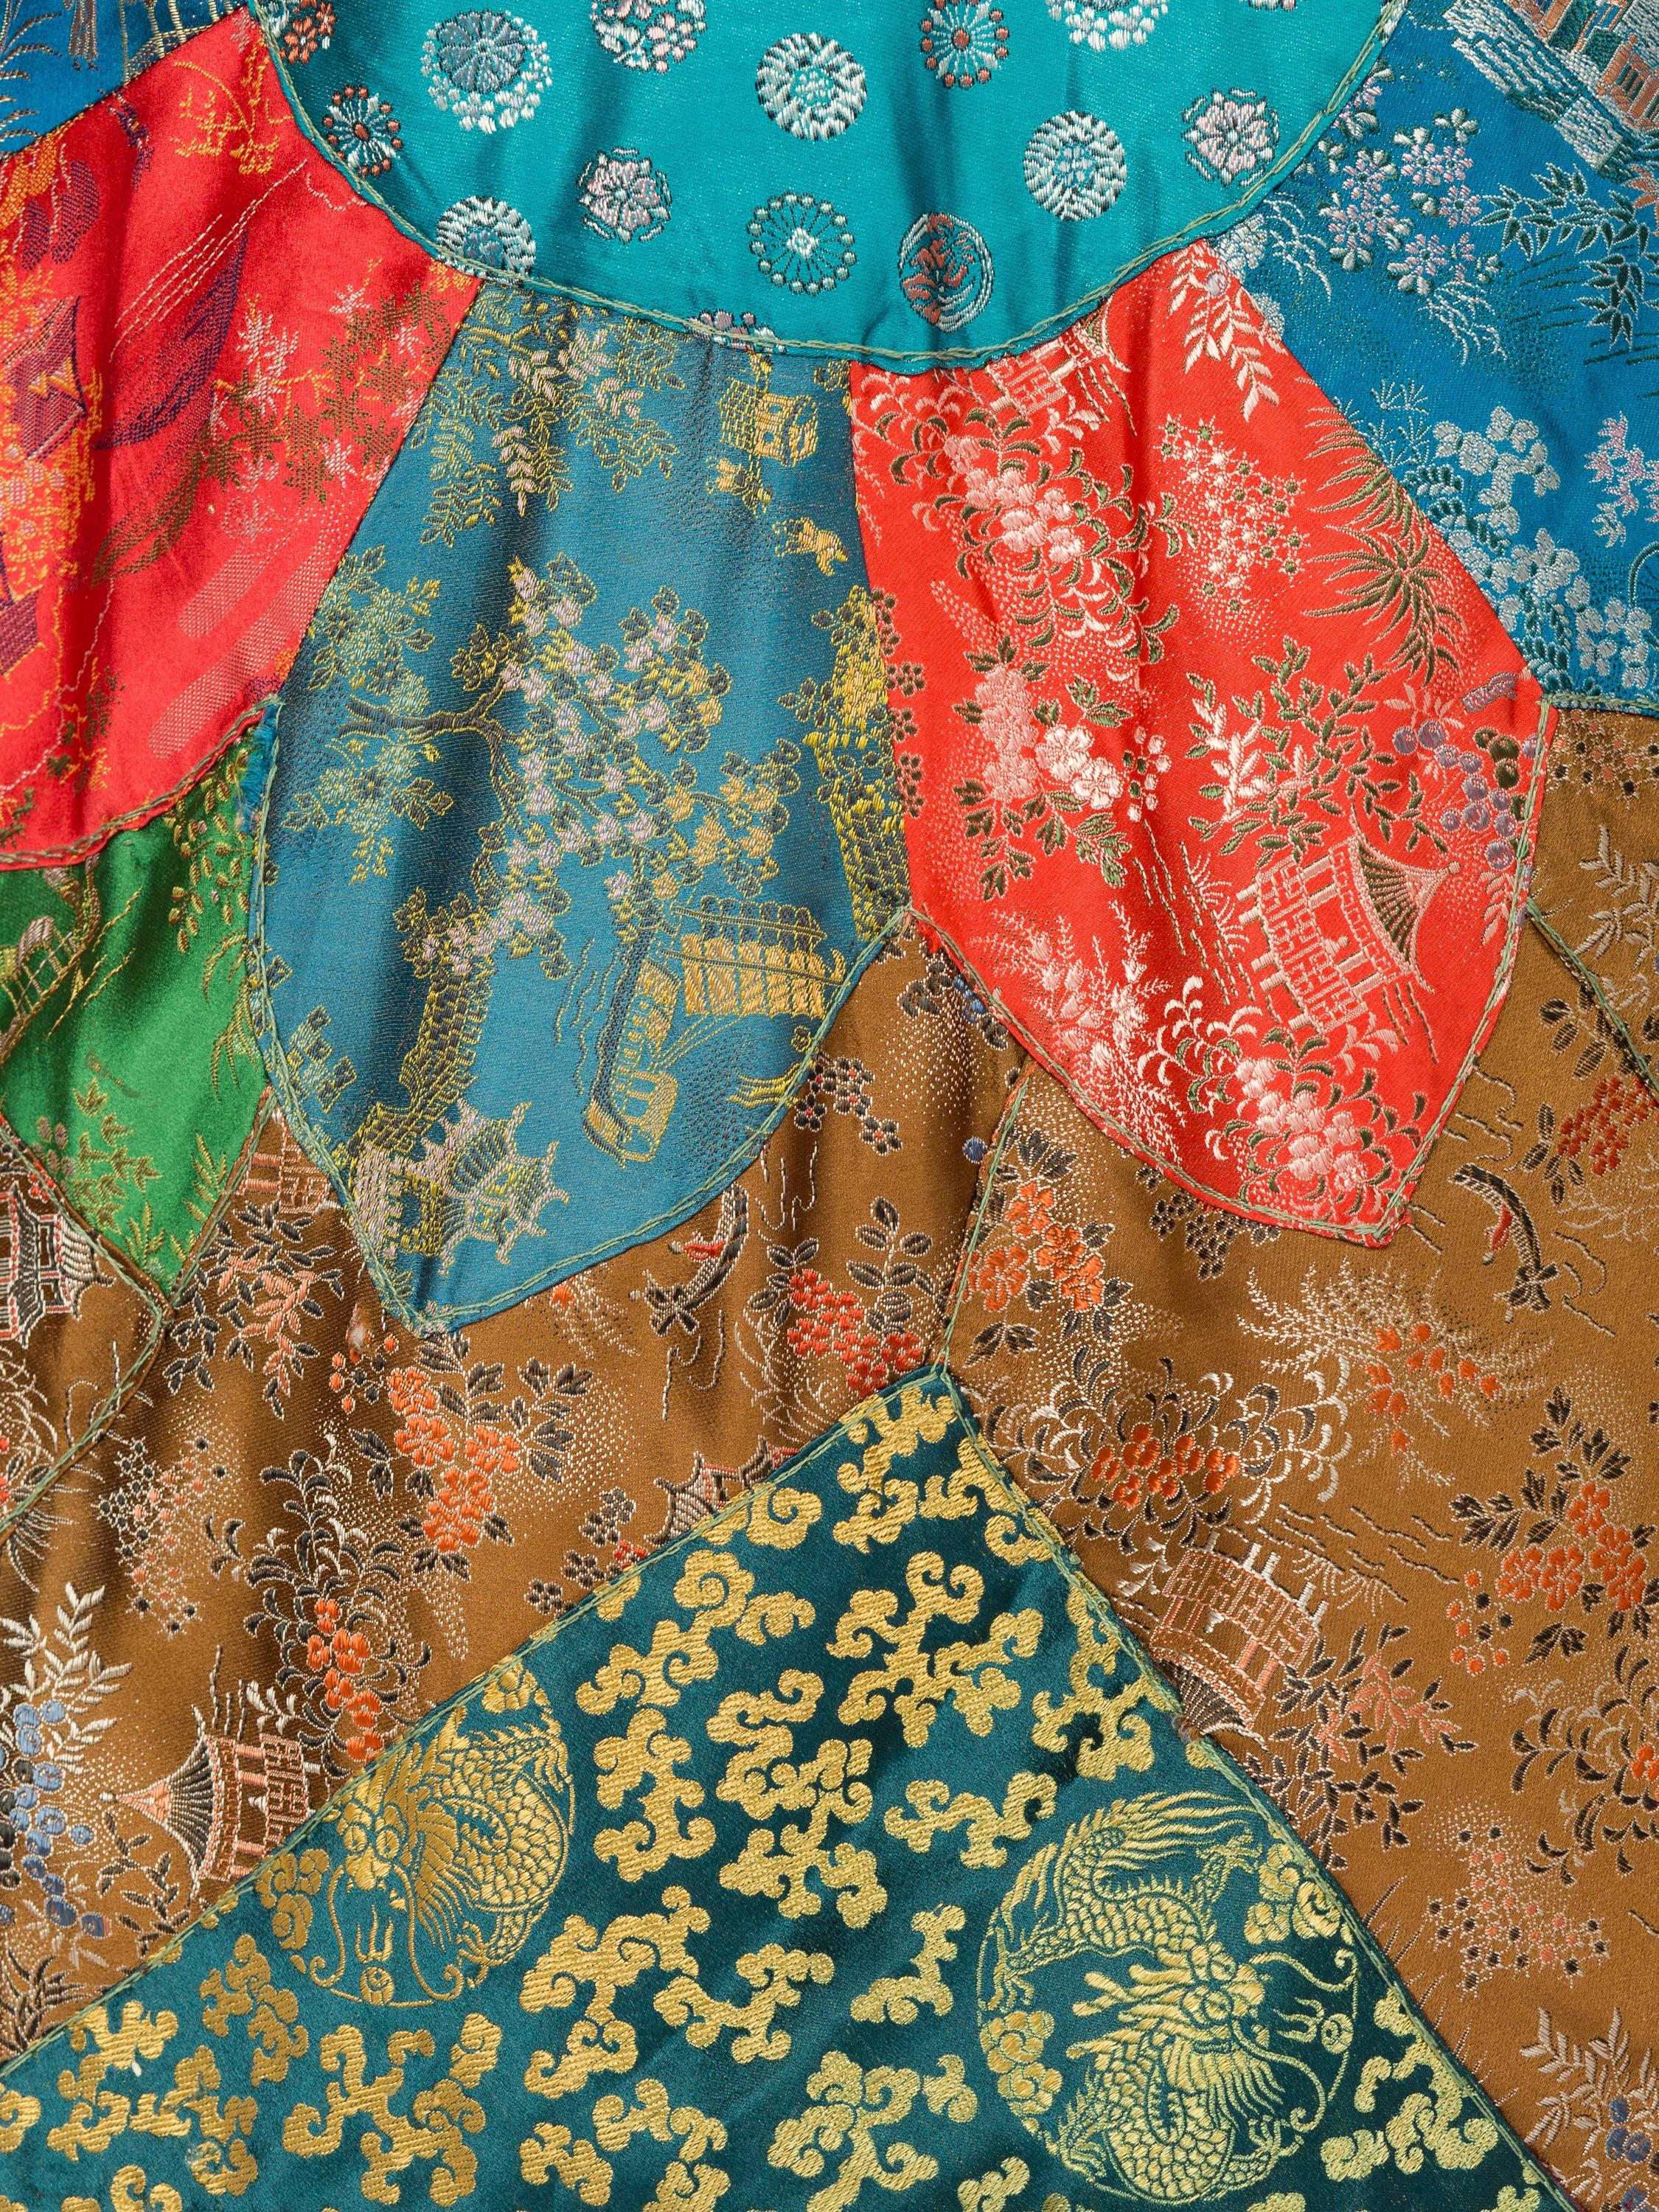 MORPHEW COLLECTION Silk Brocade Antique Fabric Patchwork Duster Coat 6